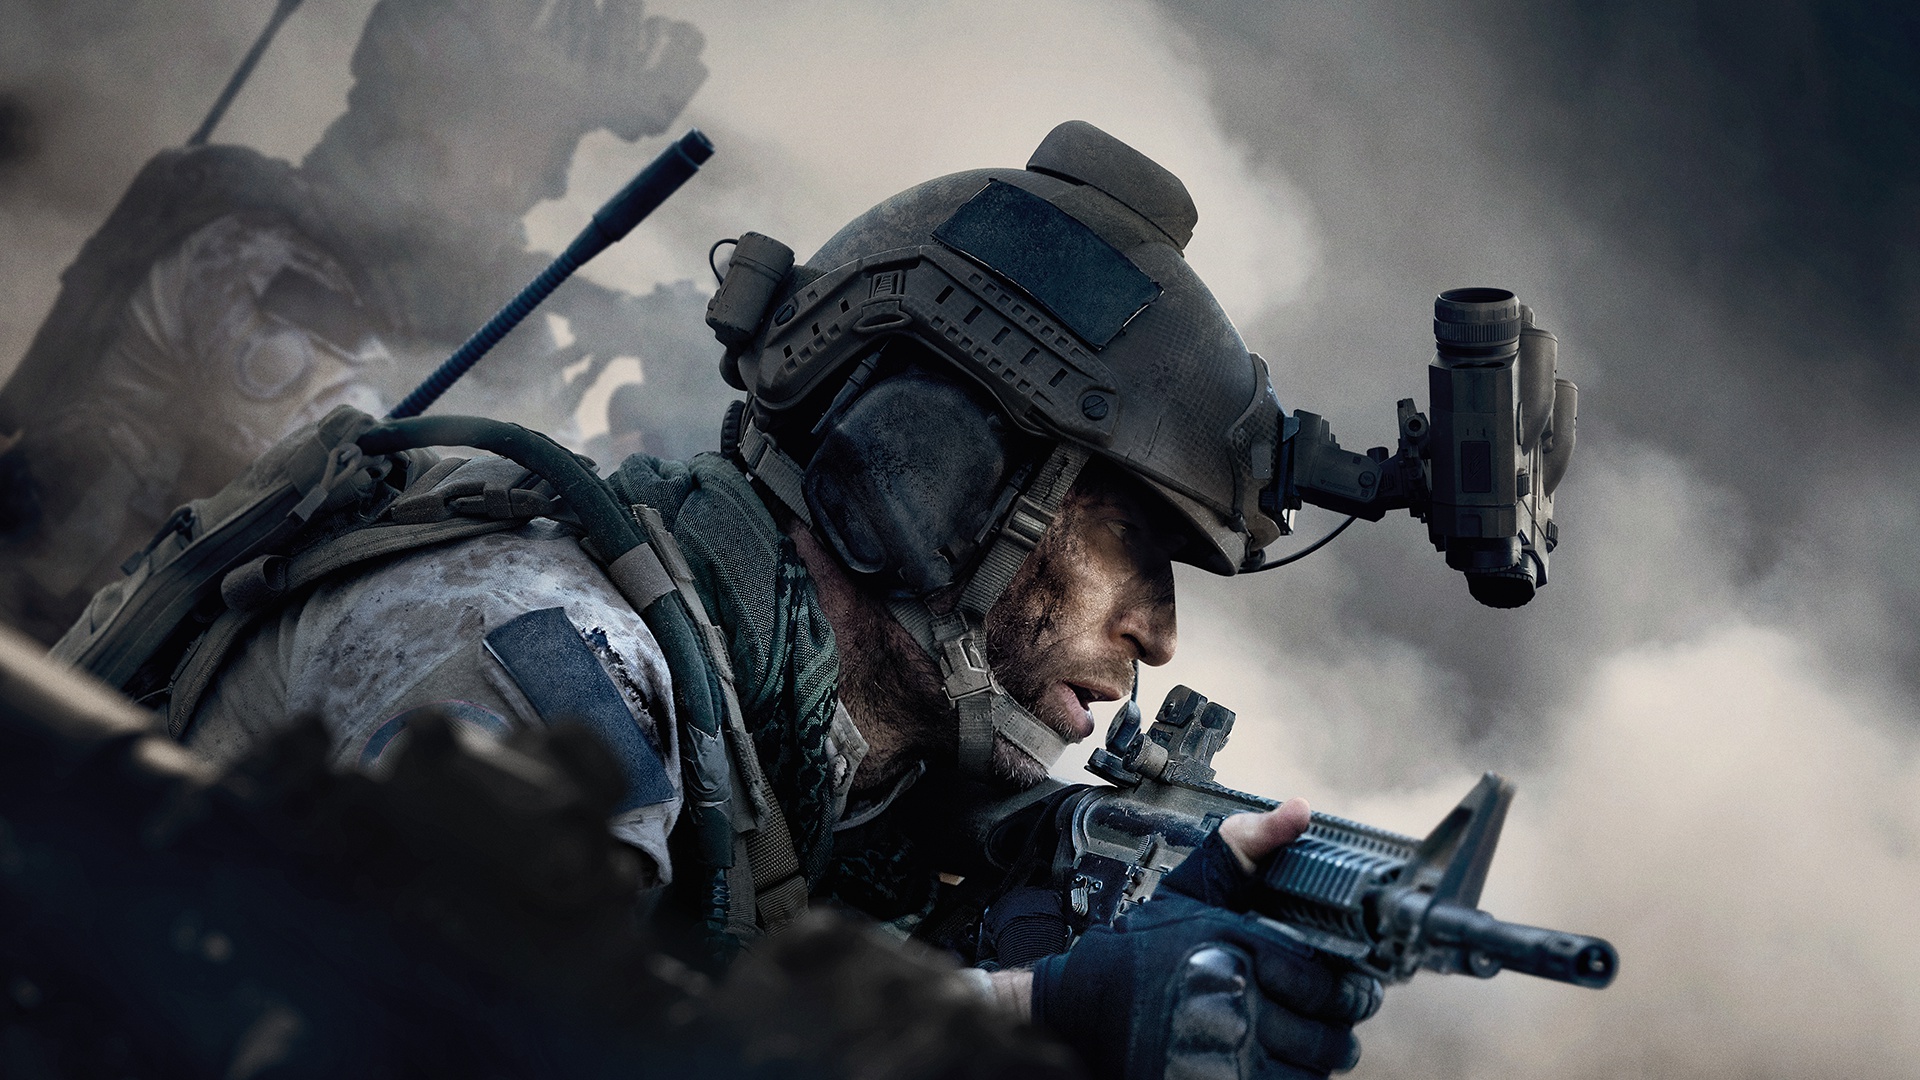 Call Of Duty Modern Warfare HD Wallpaper Background Image 1920x1080